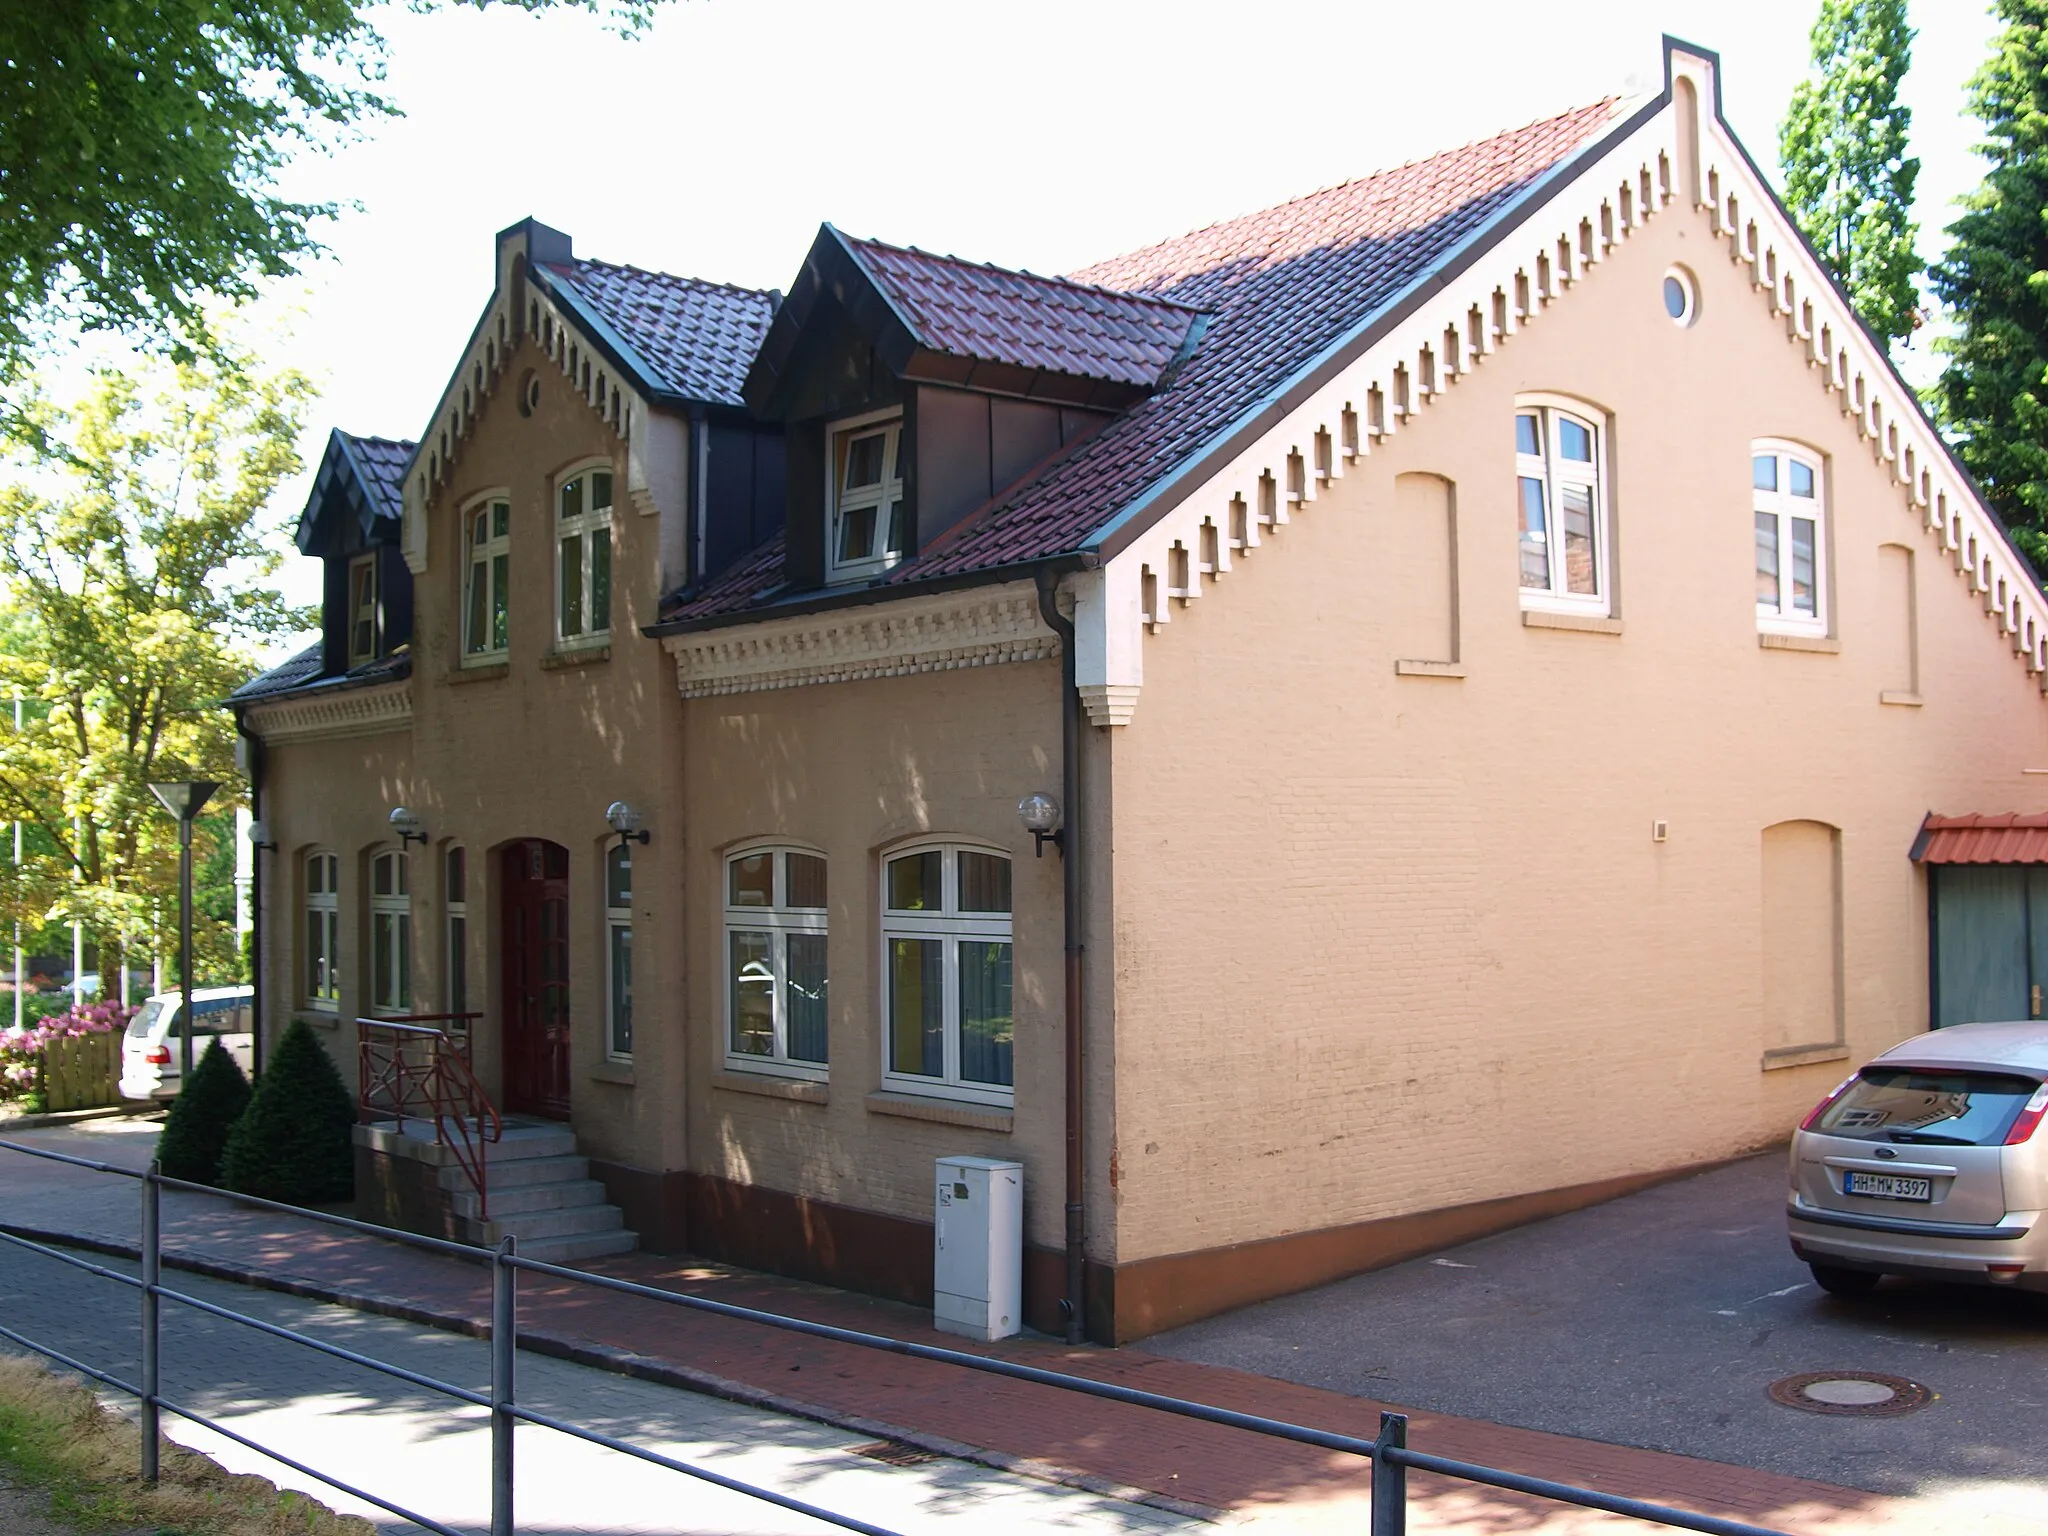 Photo showing: Residential house, Kirchenstraße 2, Rellingen (Kreis Pinneberg), Germany. Cultural heritiage monument.